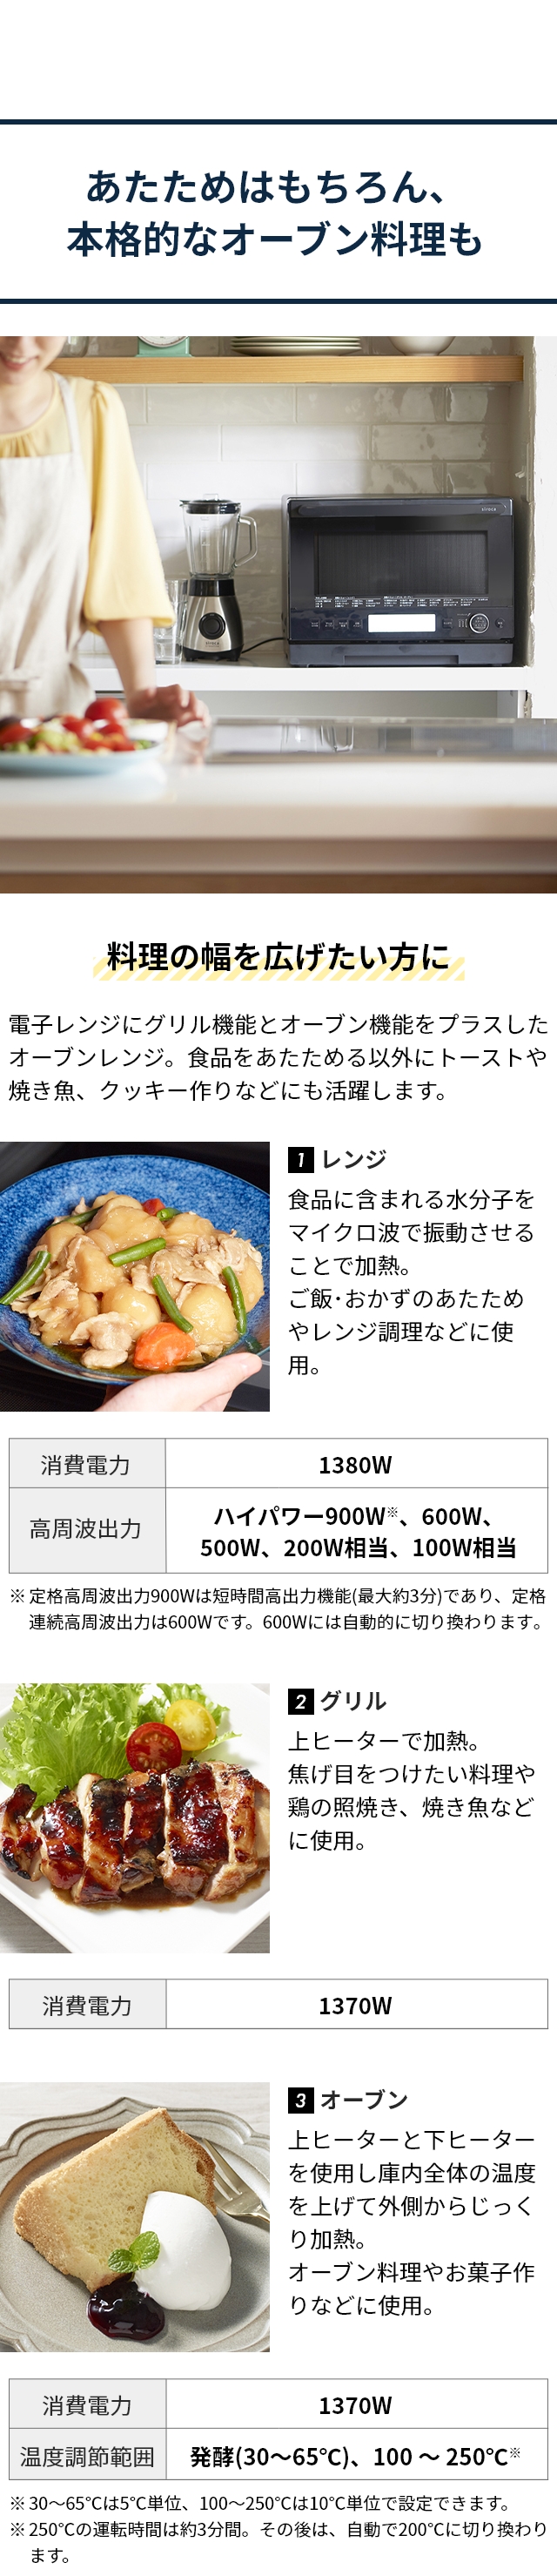 siroca (シロカ) オーブンレンジ SX-20G151